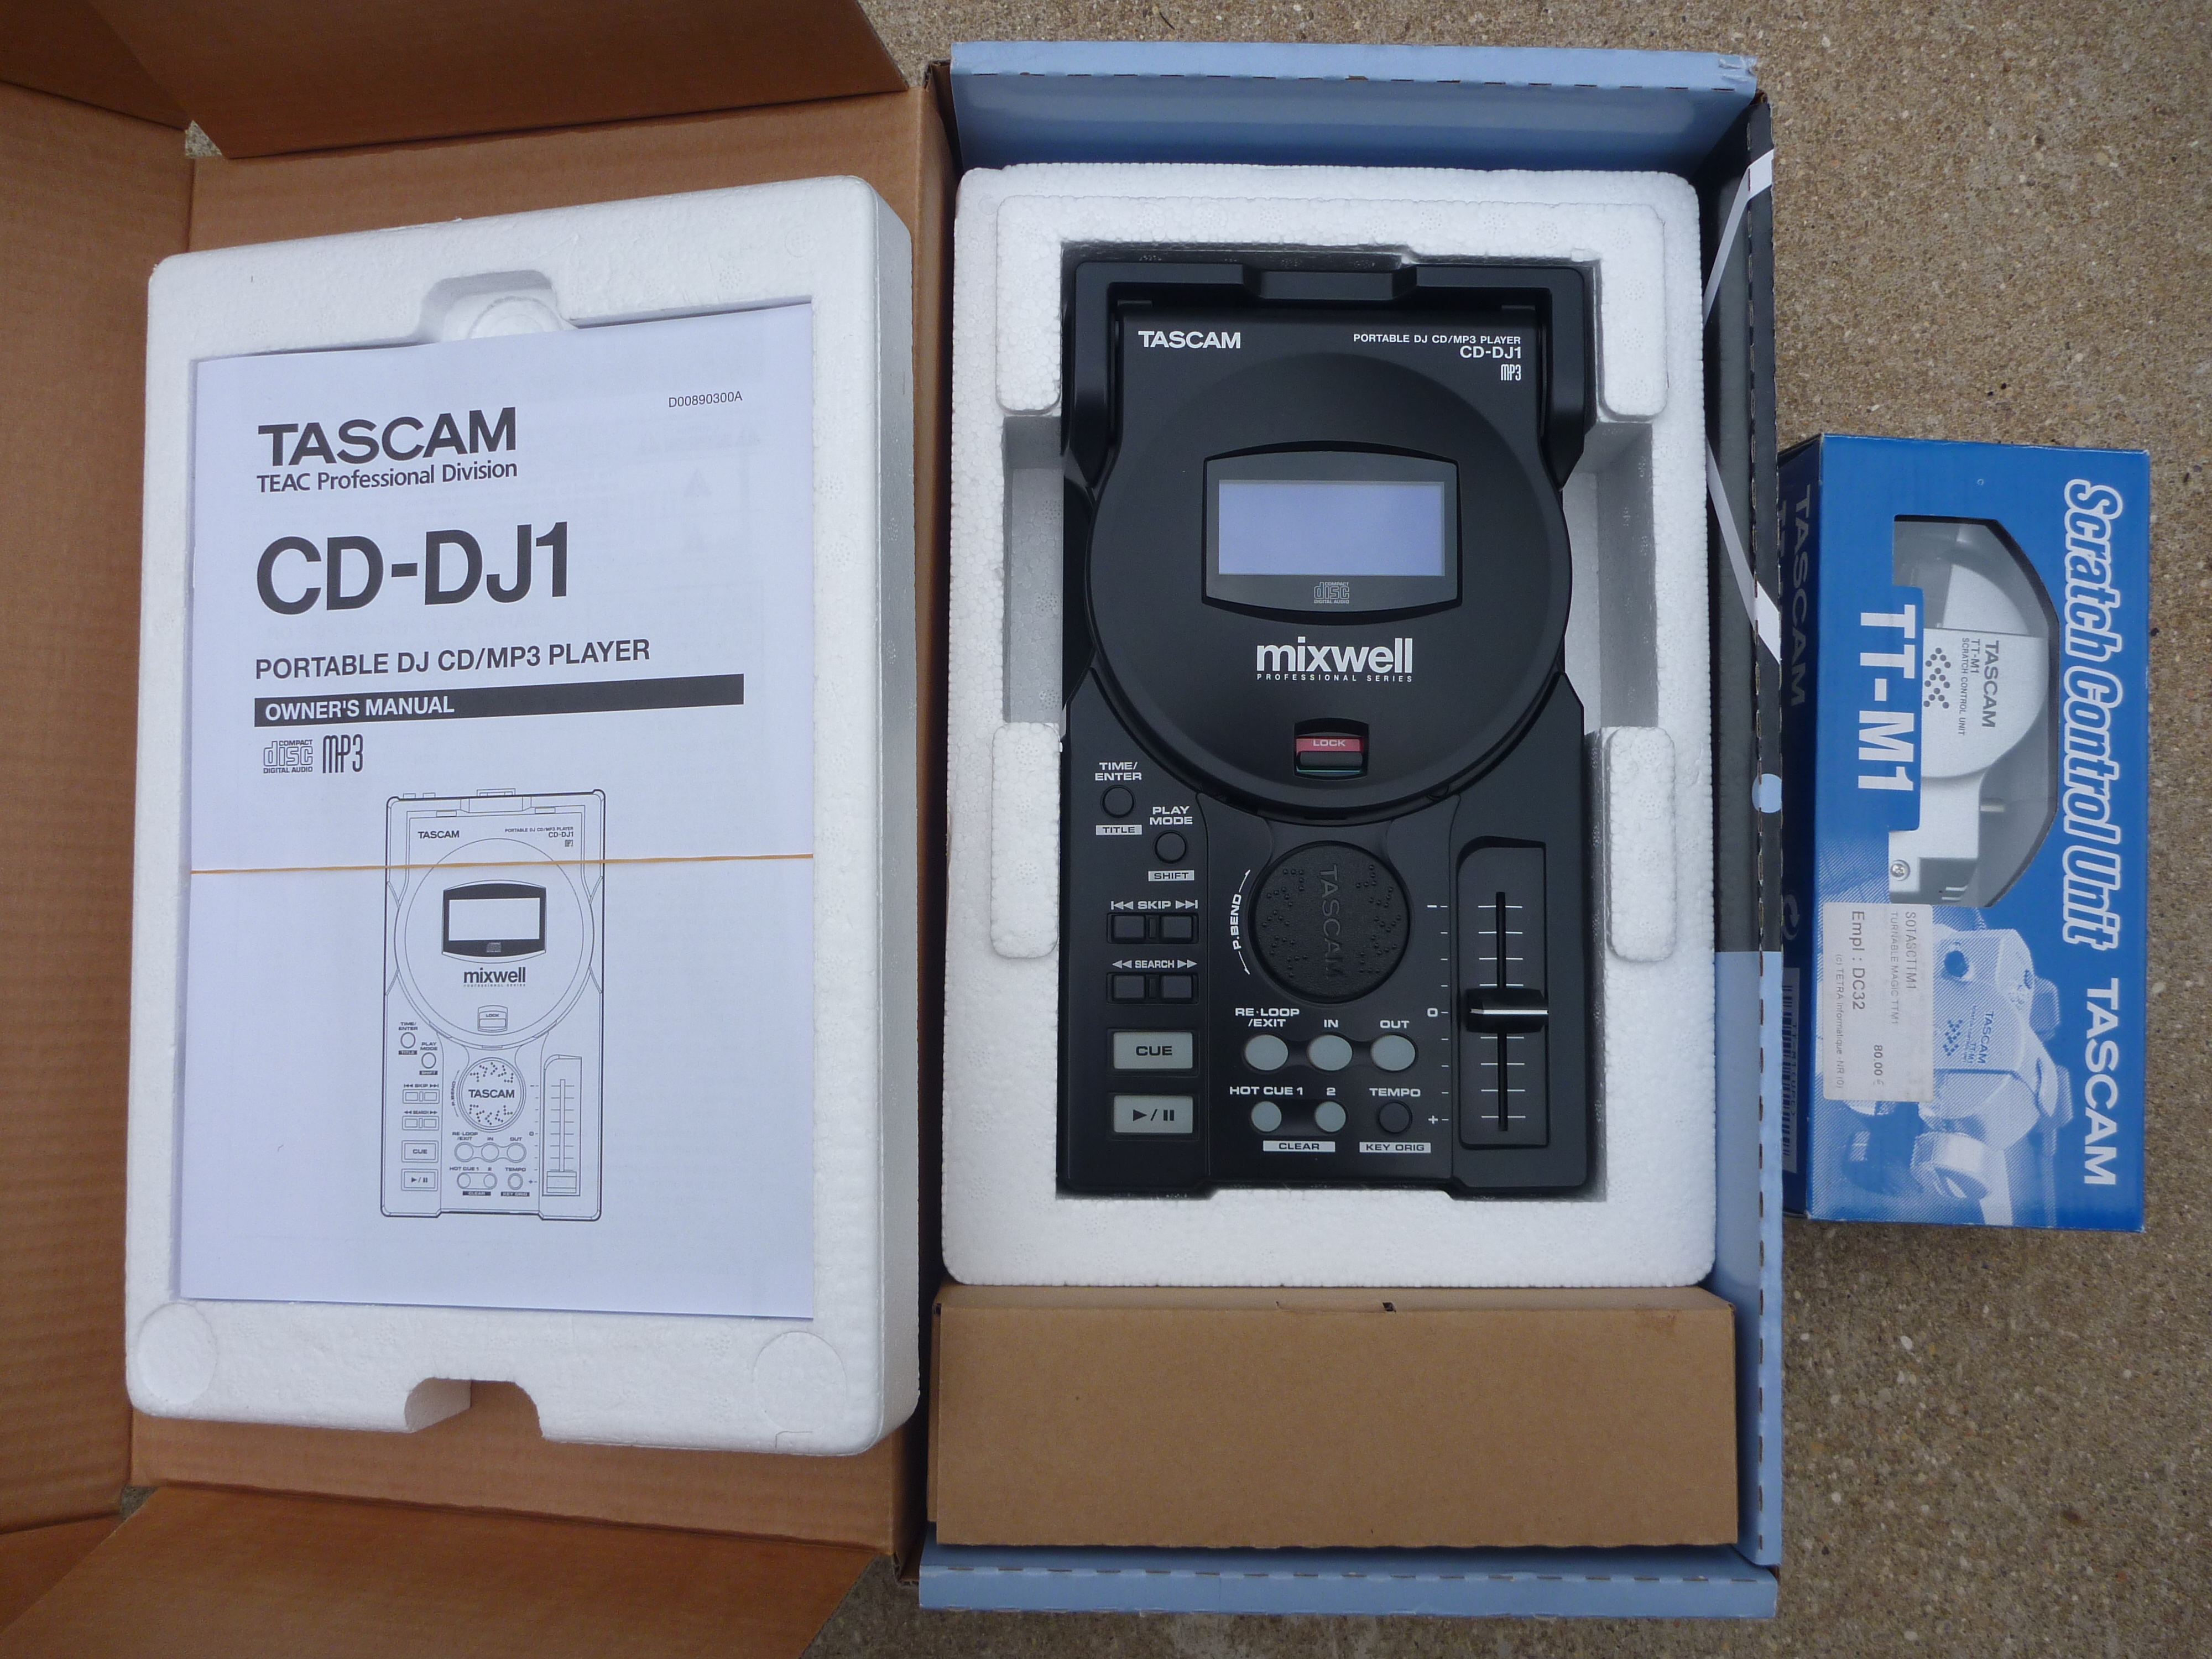 CD-DJ1 - Tascam CD-DJ1 - Audiofanzine